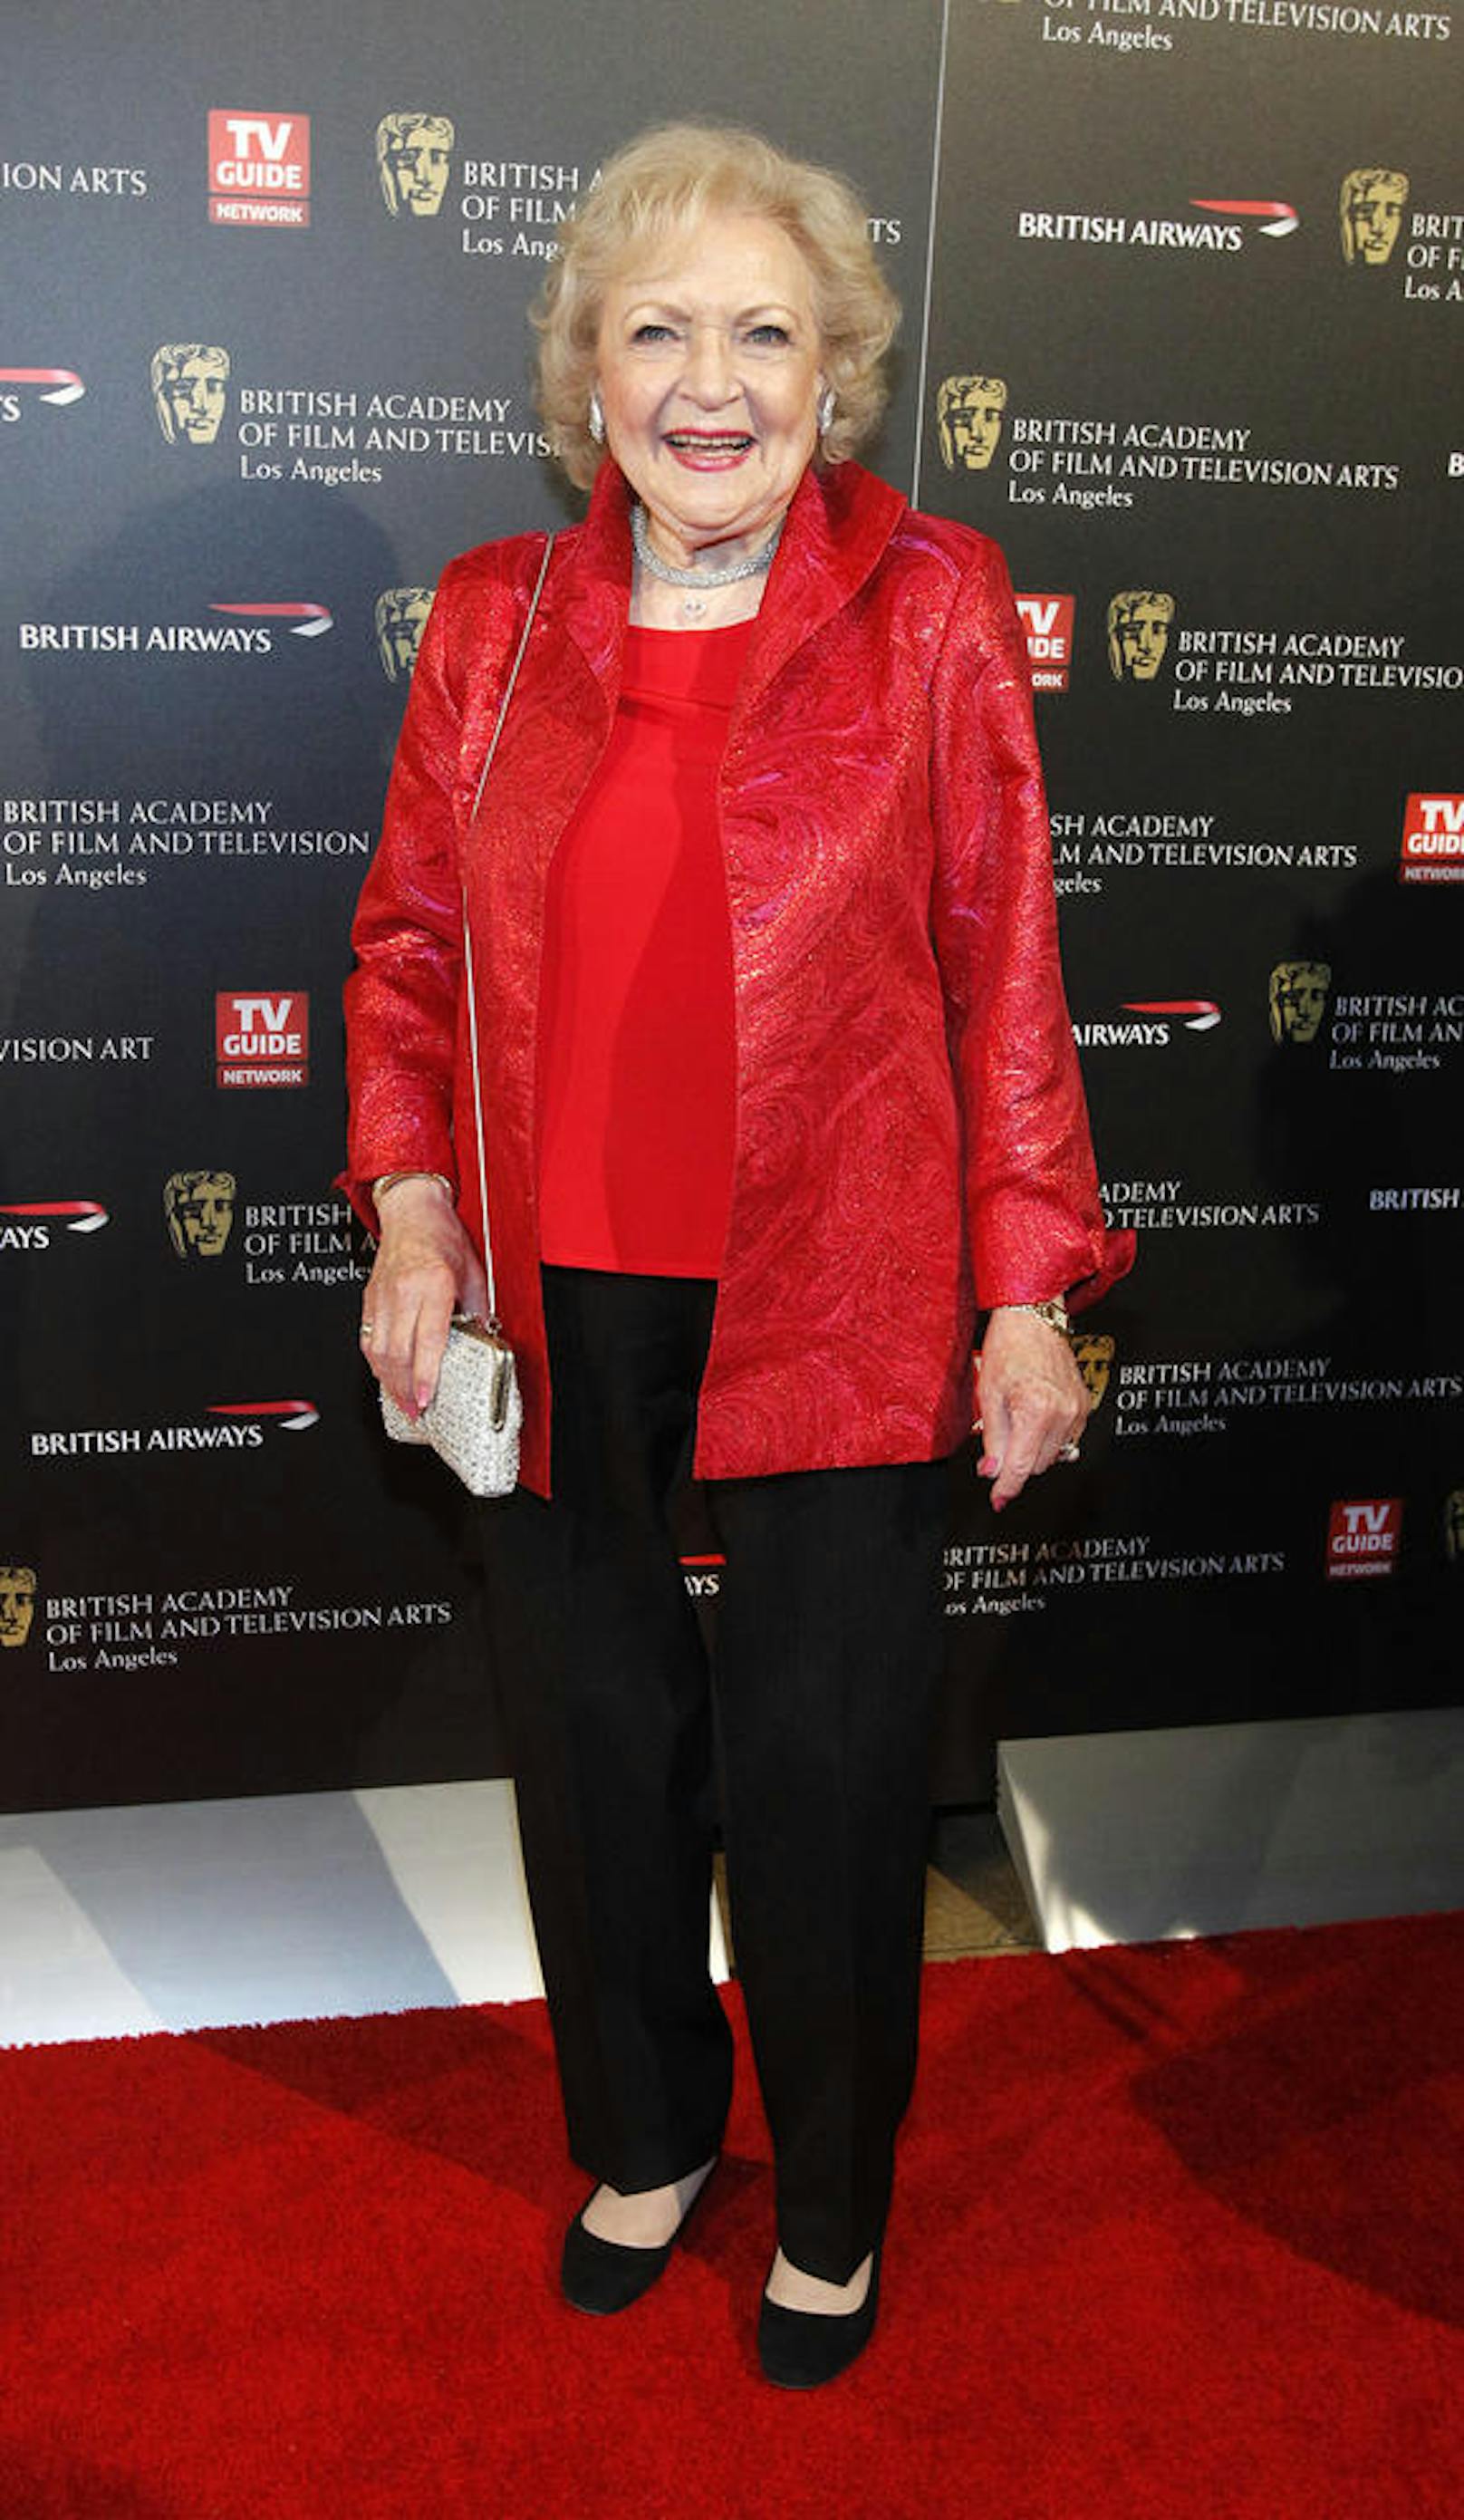 Betty White bei den 19. BAFTA (British Academy of Film and Television Arts) Los Angeles Britannia Awards in Los Angeles, 2010.